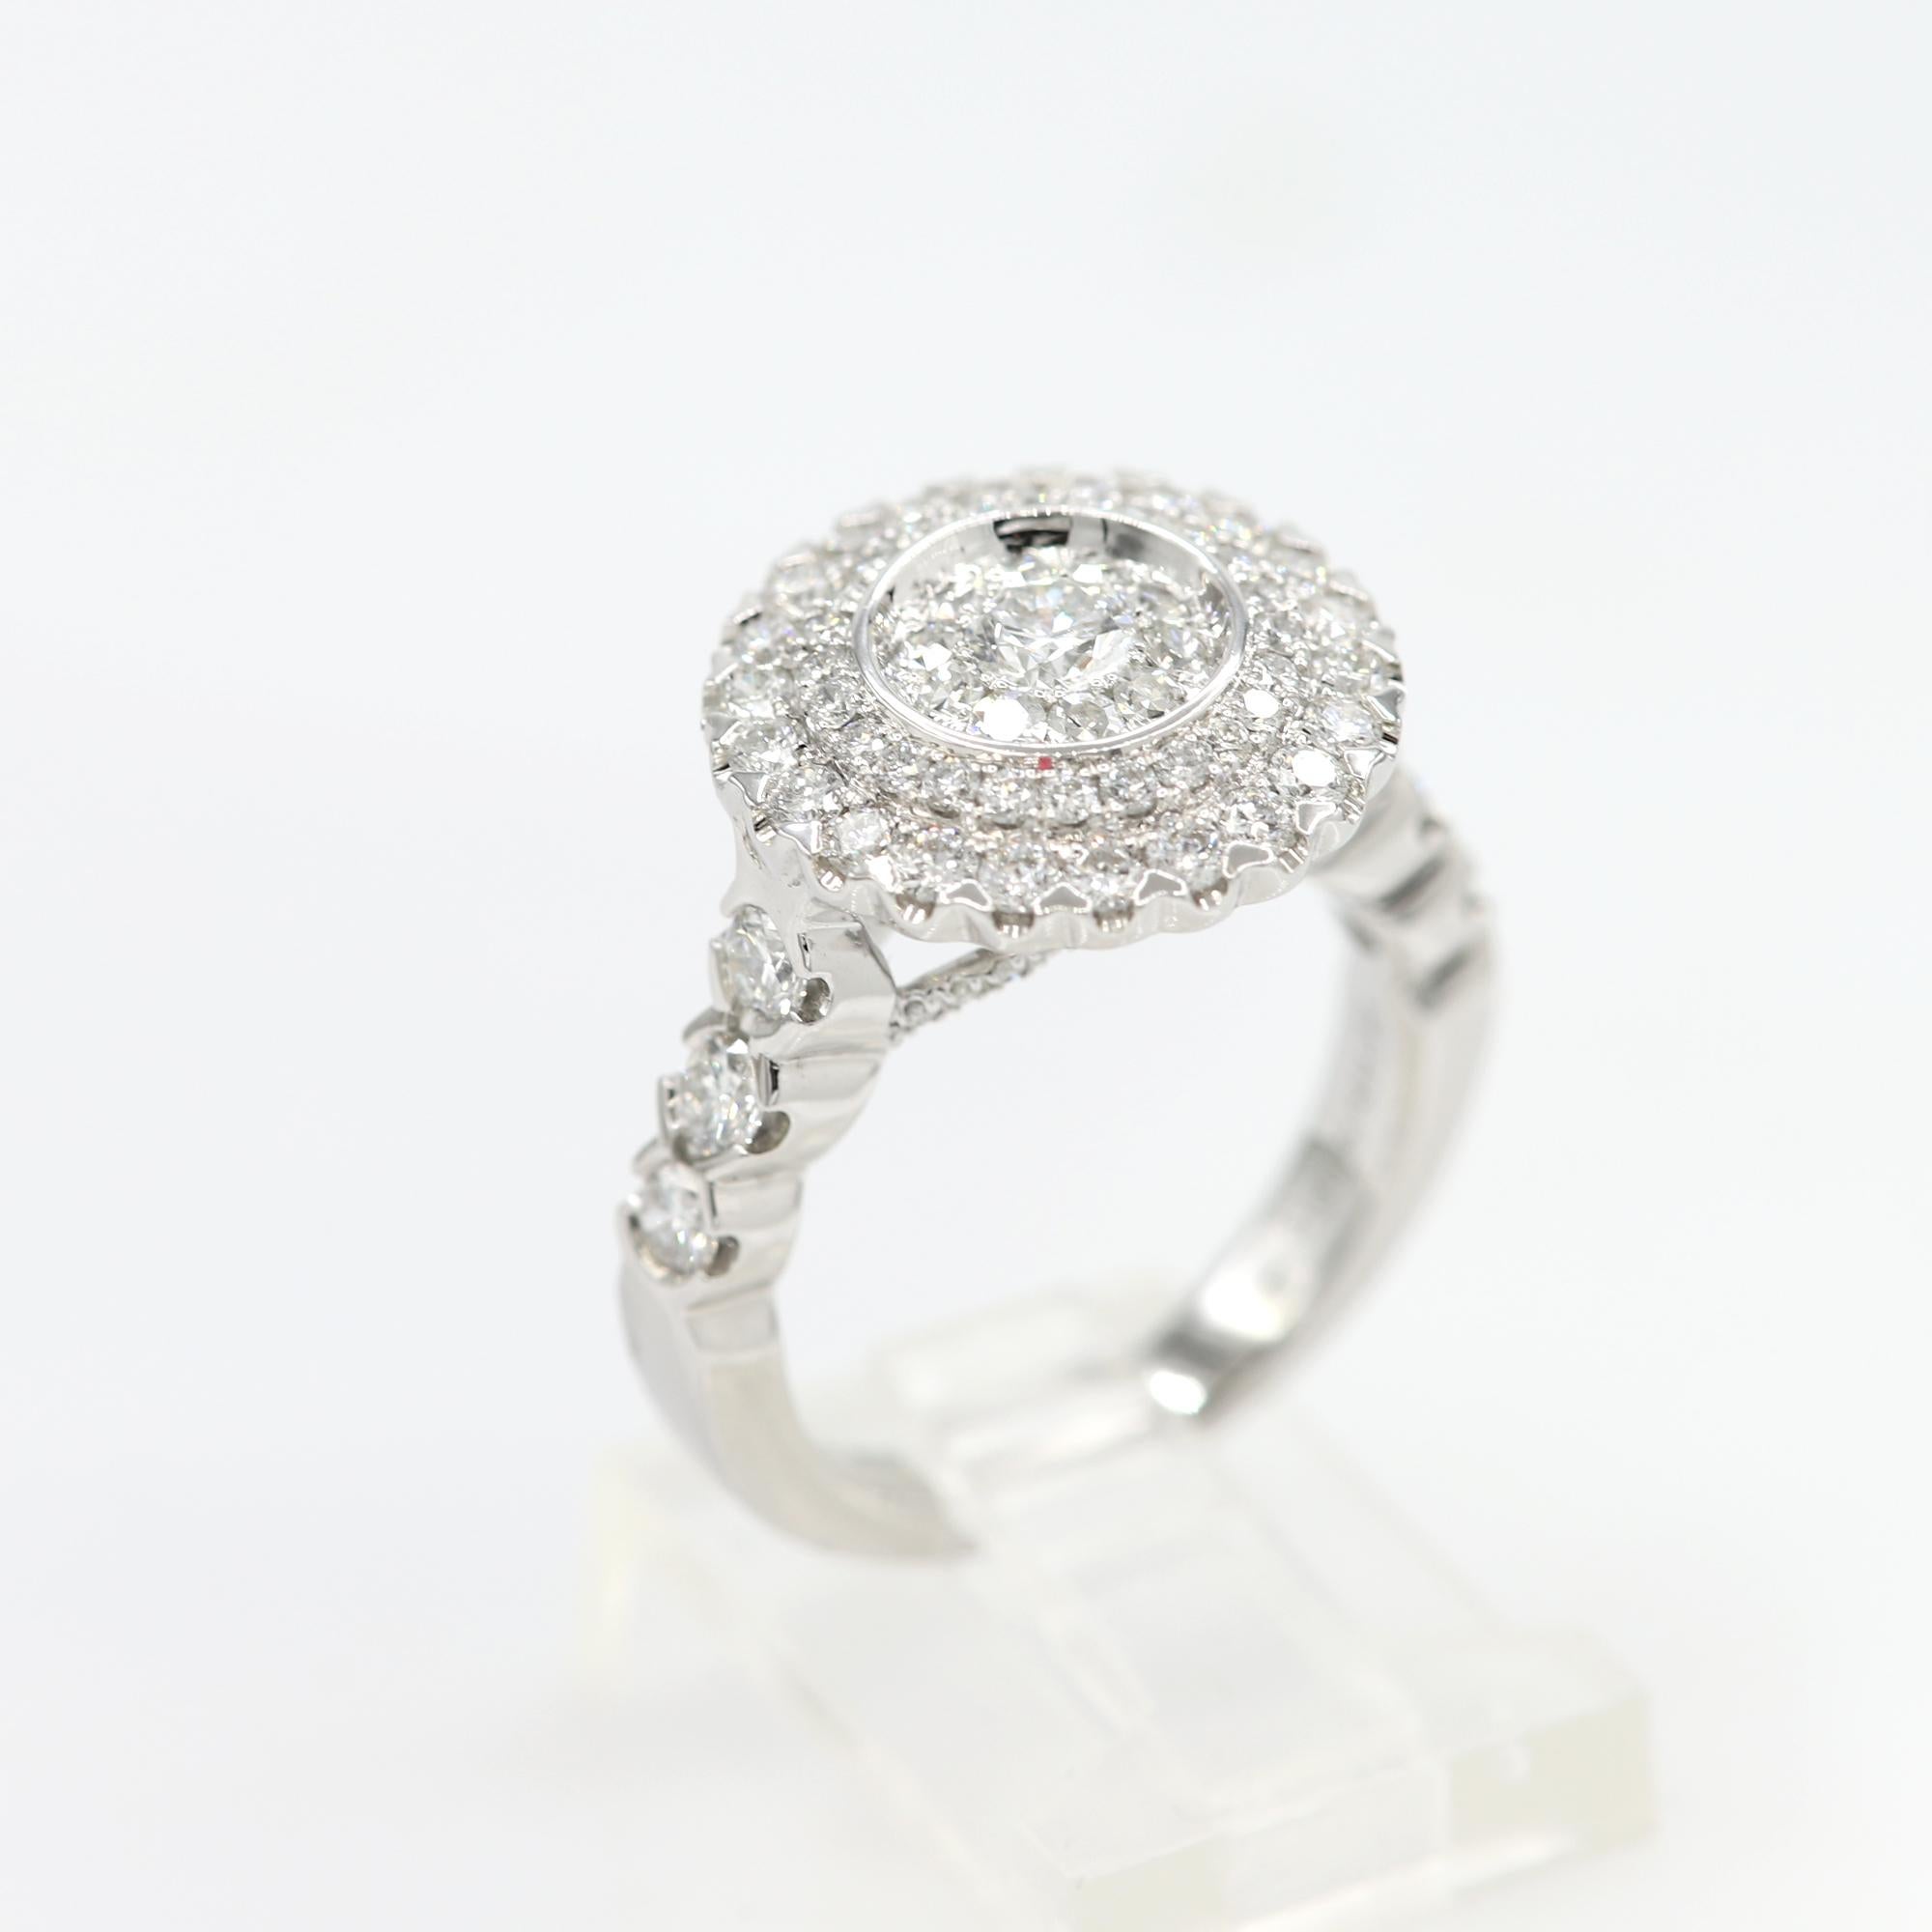 Large Cluster Diamond Ring 18 Karat White Gold Round Circle of Diamond Design For Sale 2